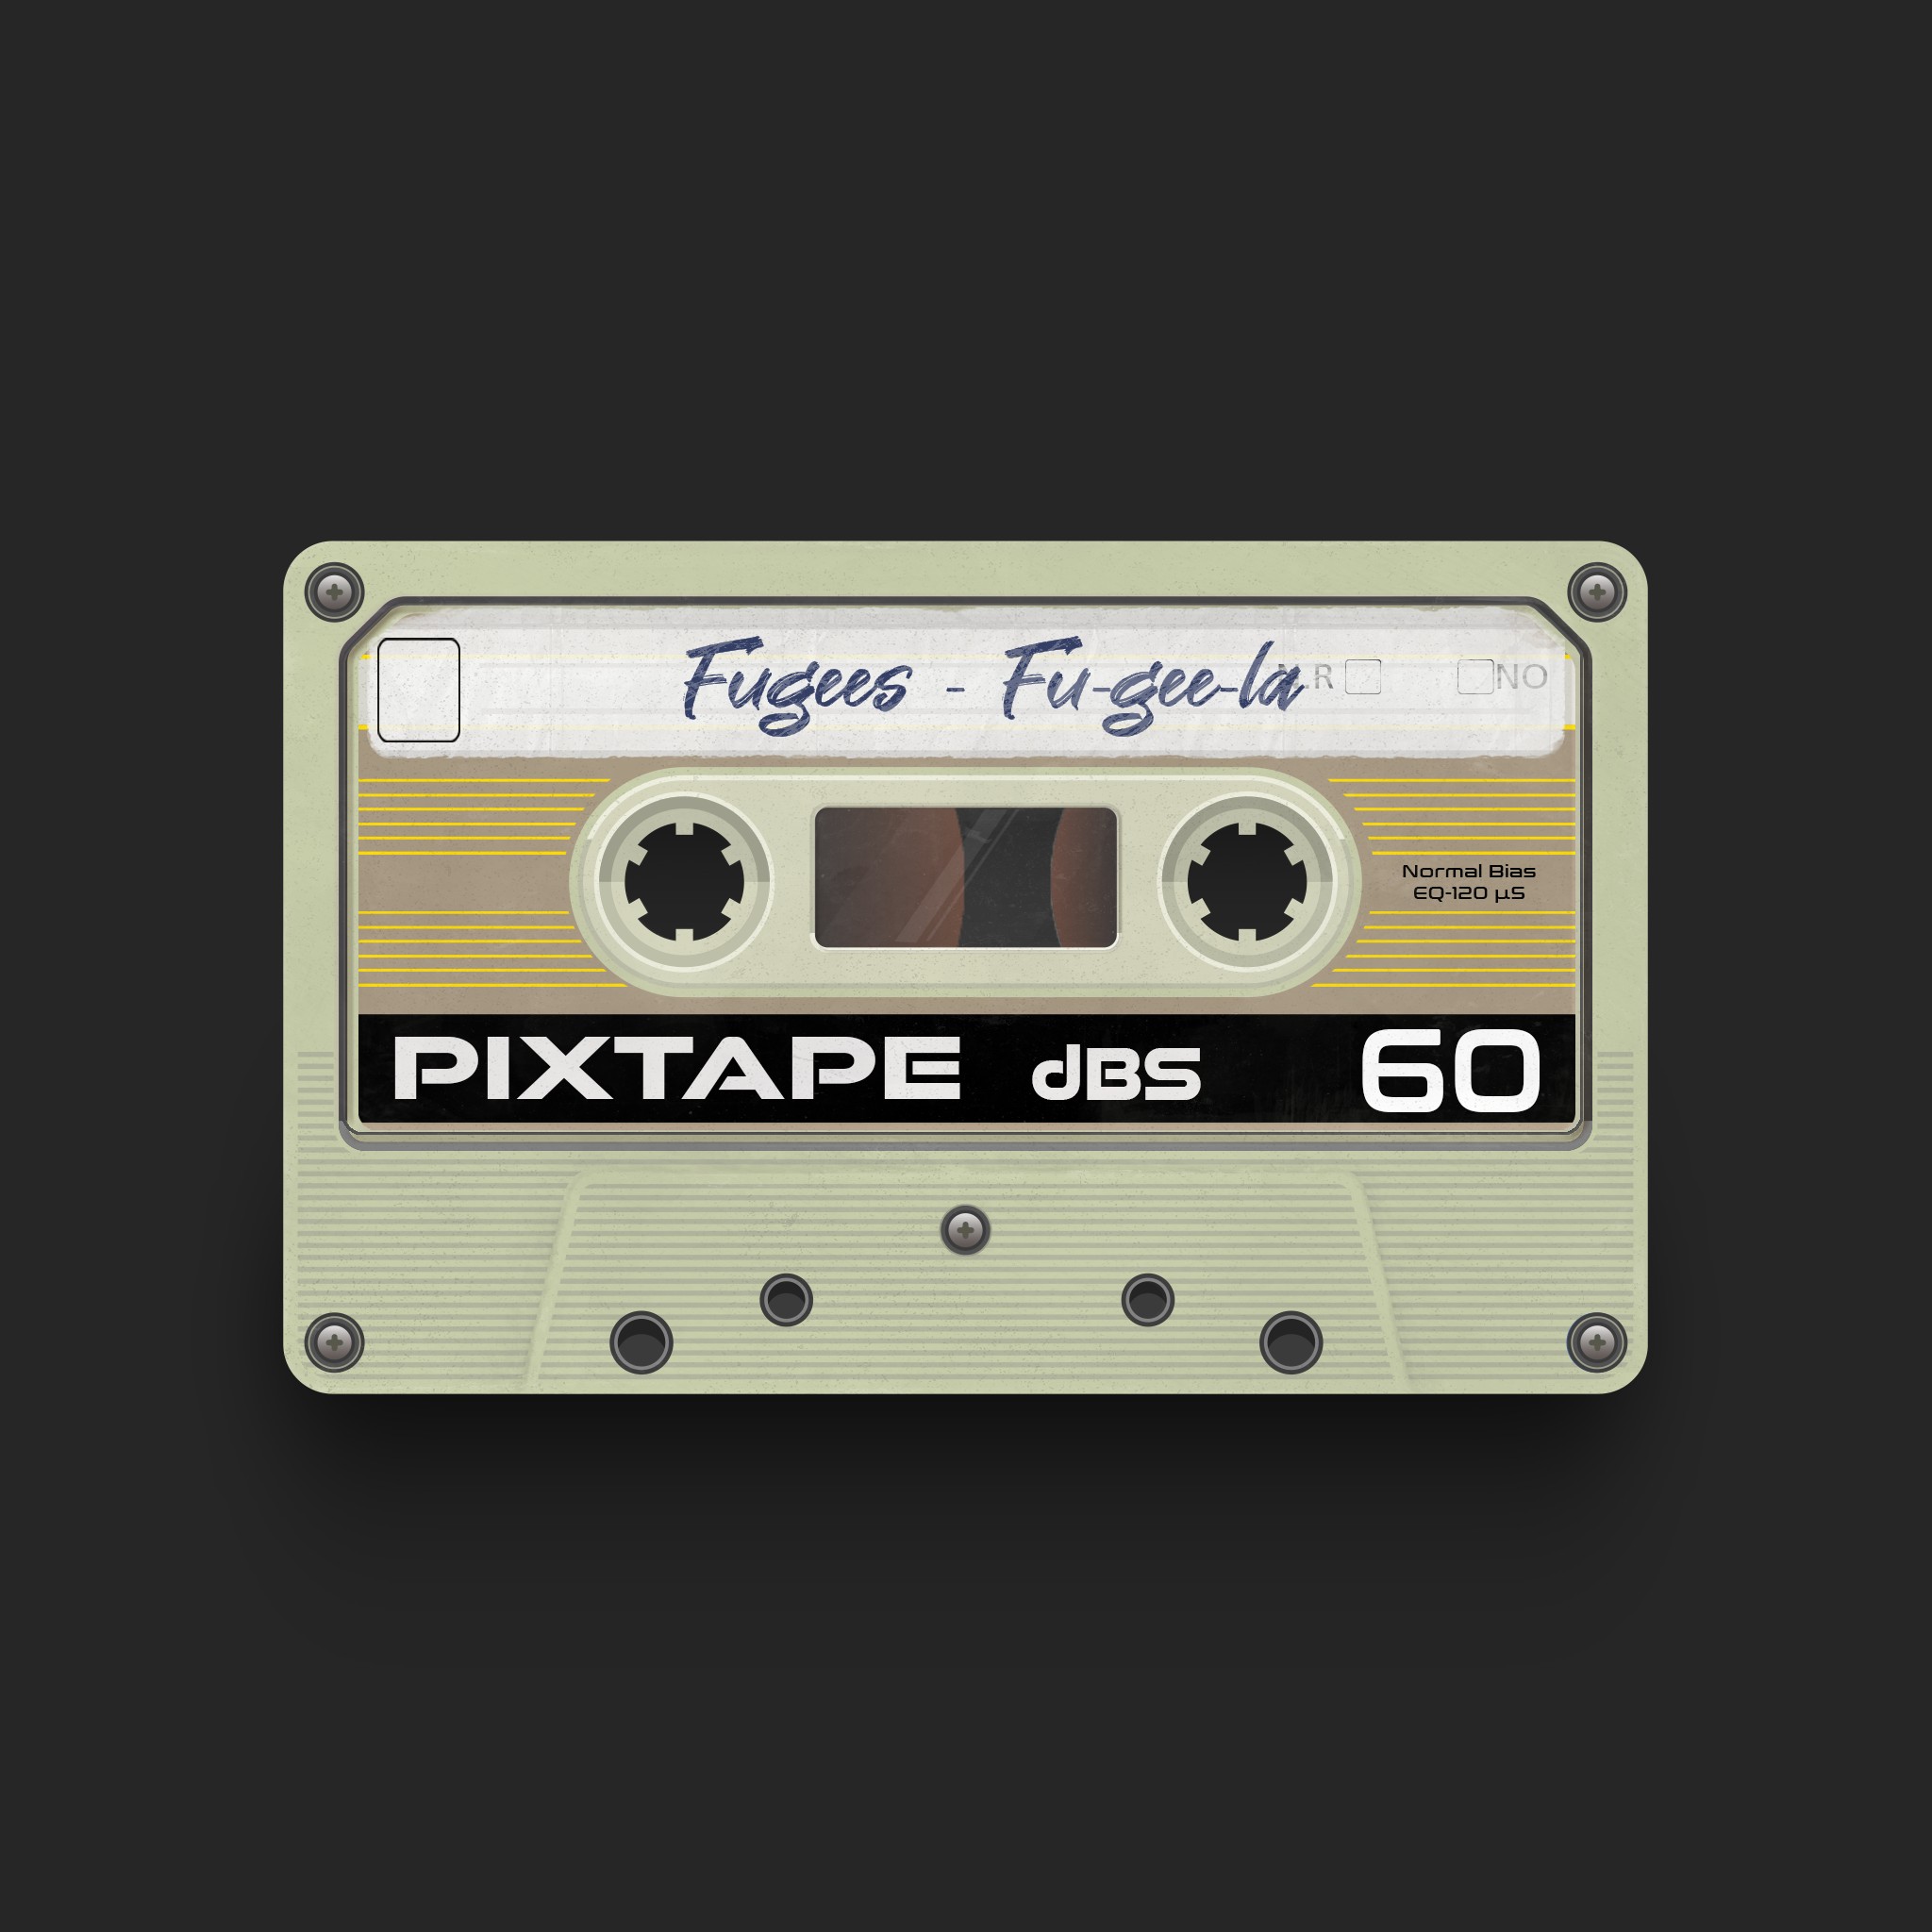 PixTape #88 | Fugees - Fu-gee-la